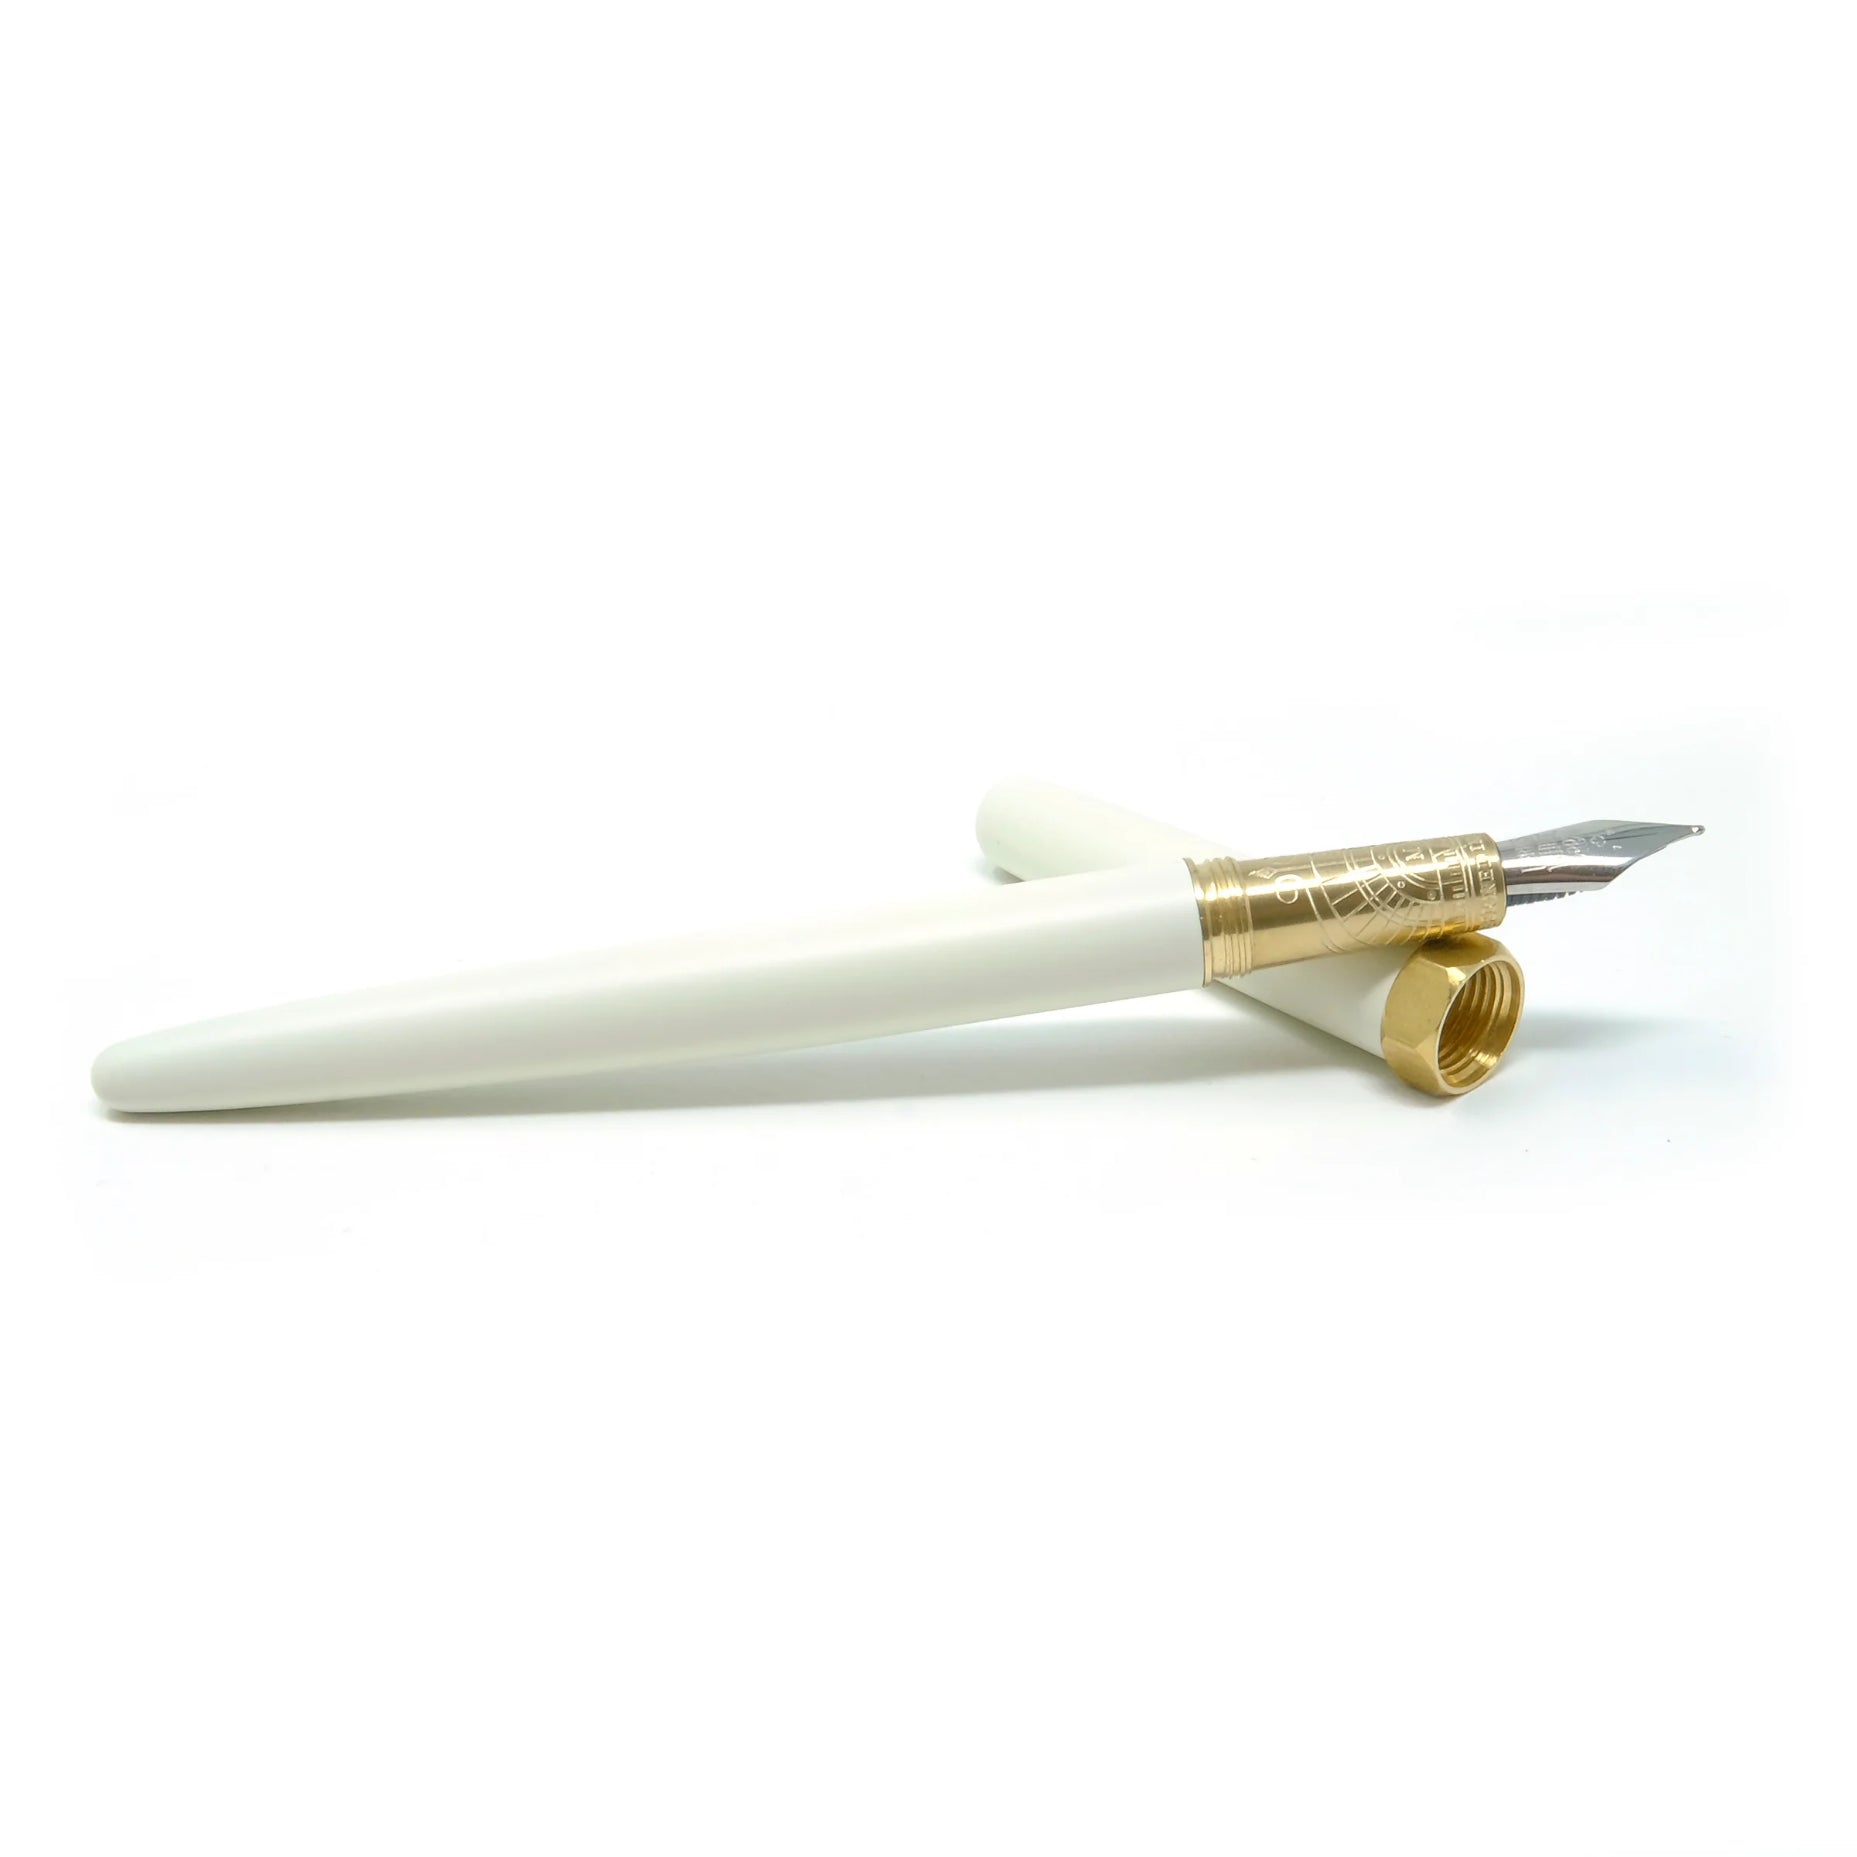 FERRIS WHEEL PRESS Brush Fountain Pen-M Creme Glacee White Satin Default Title